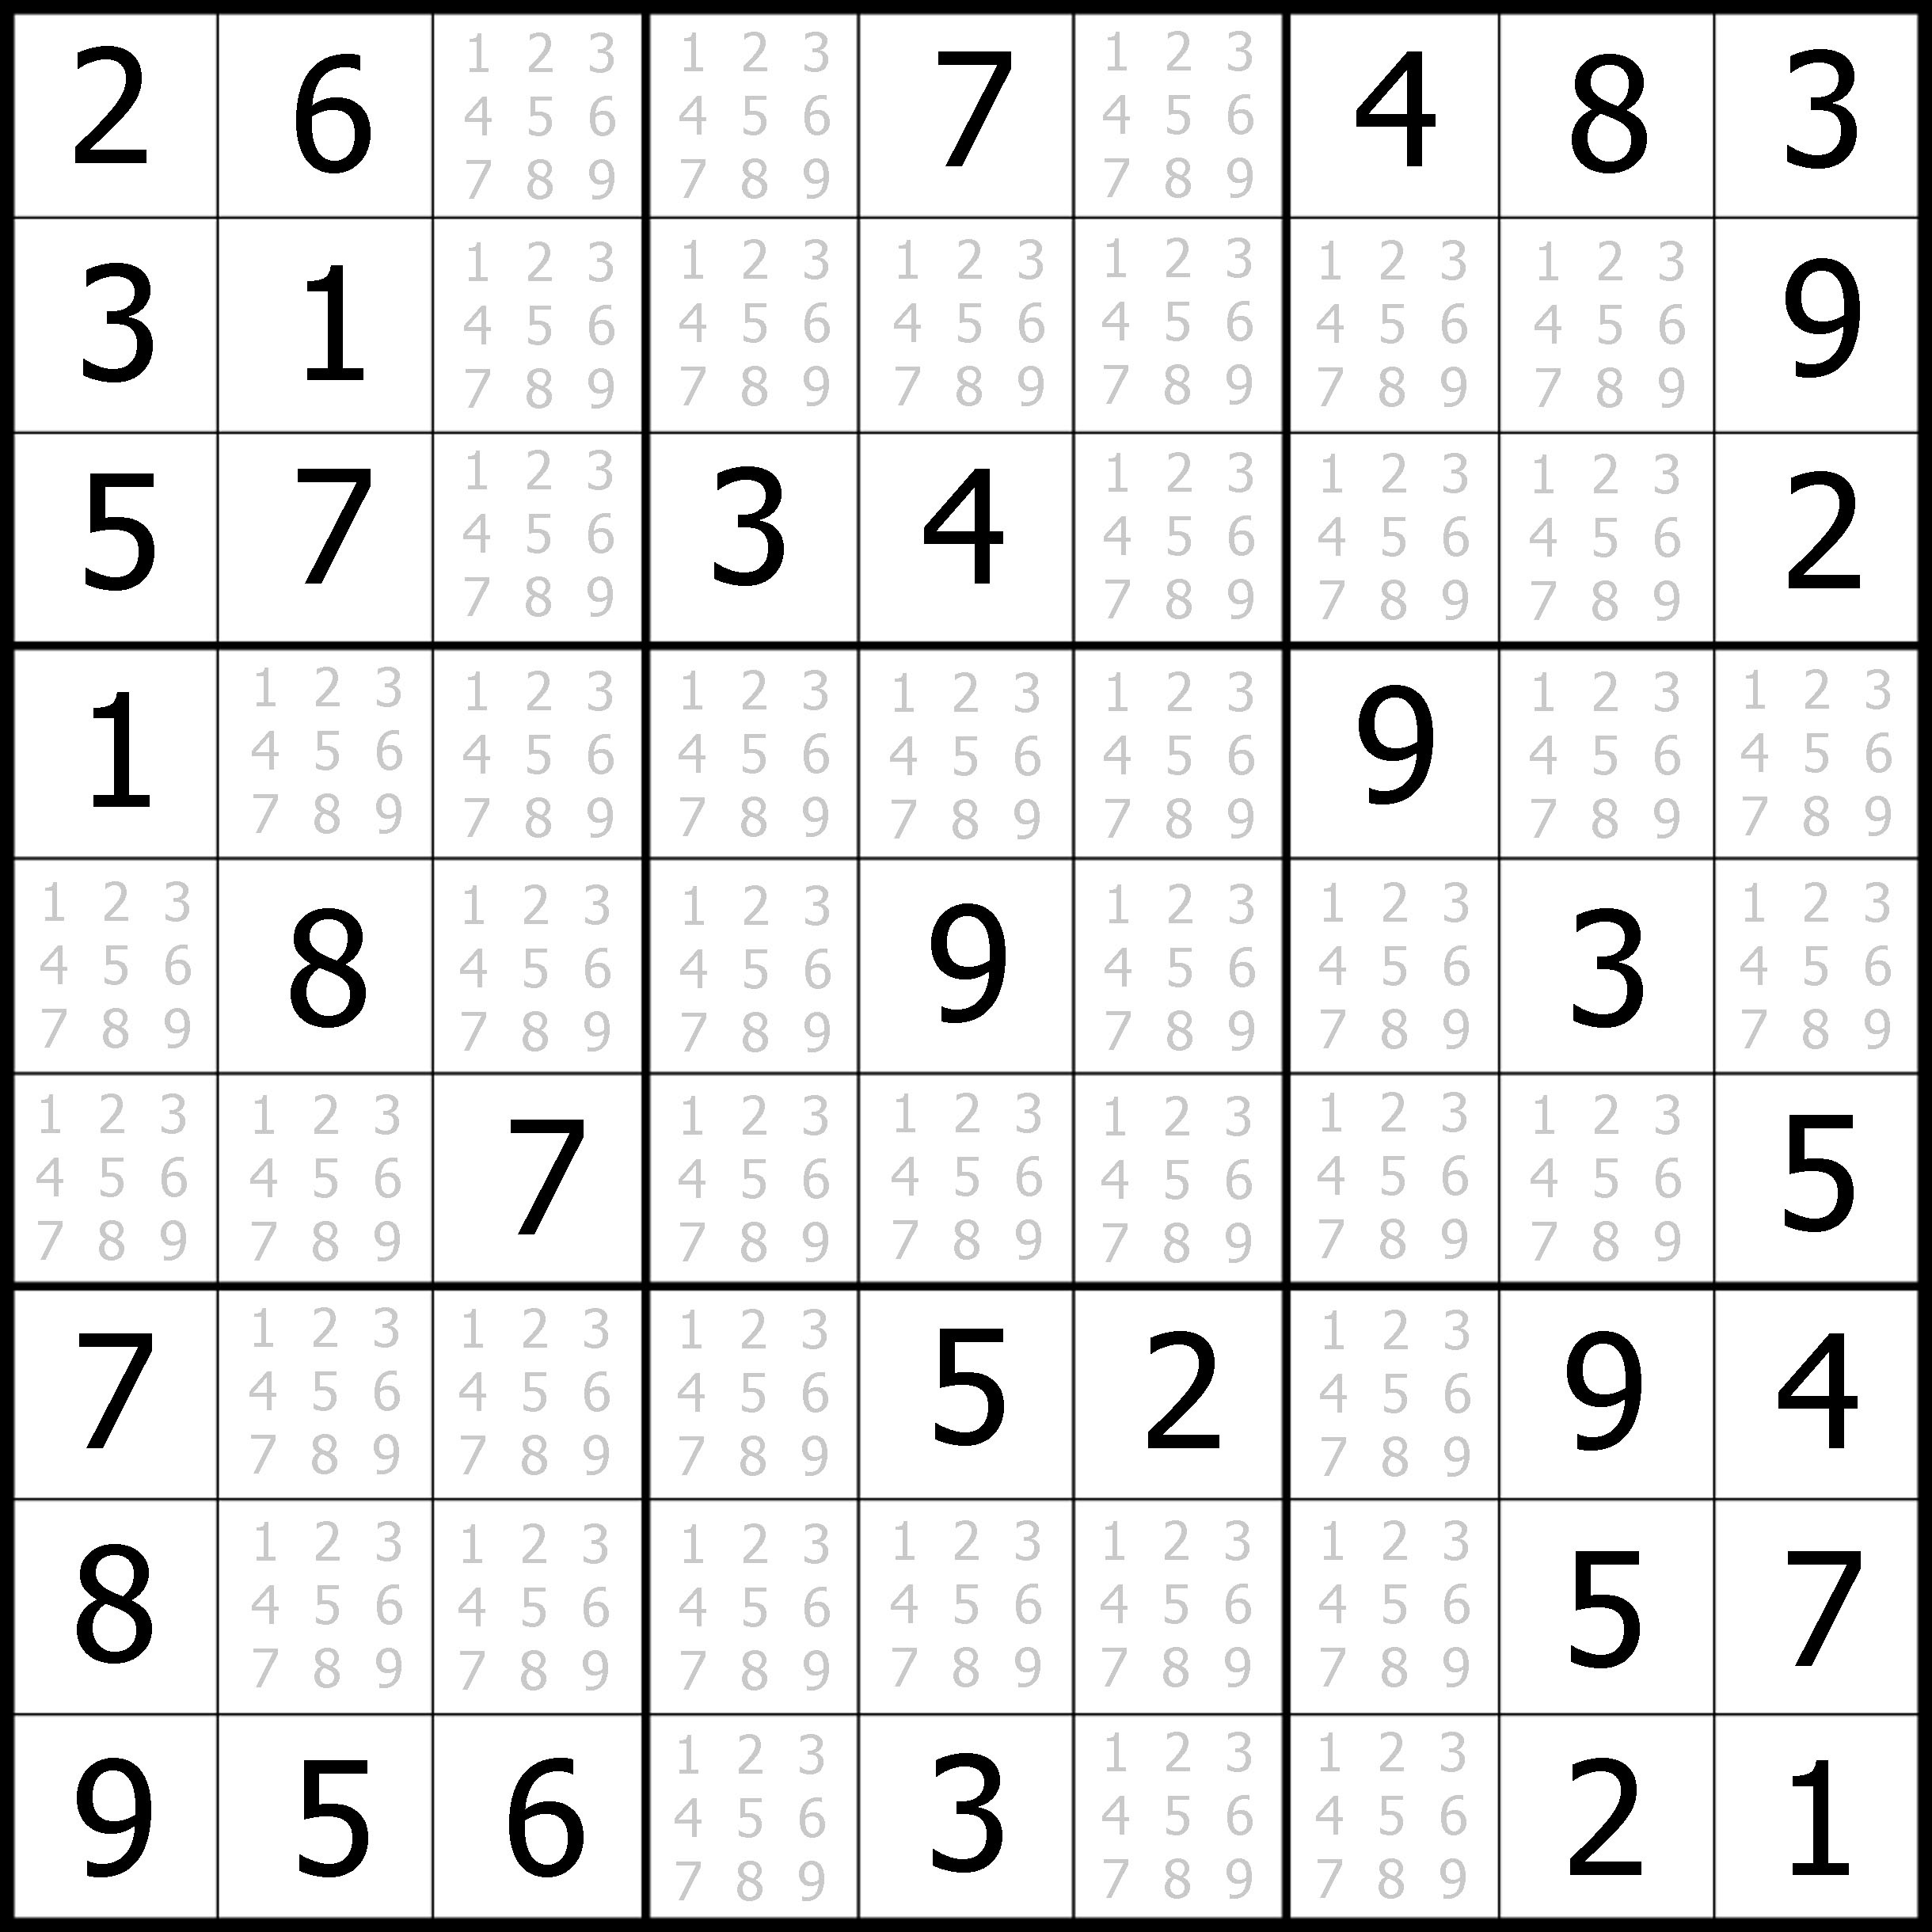 Answers To Sudoku Printables